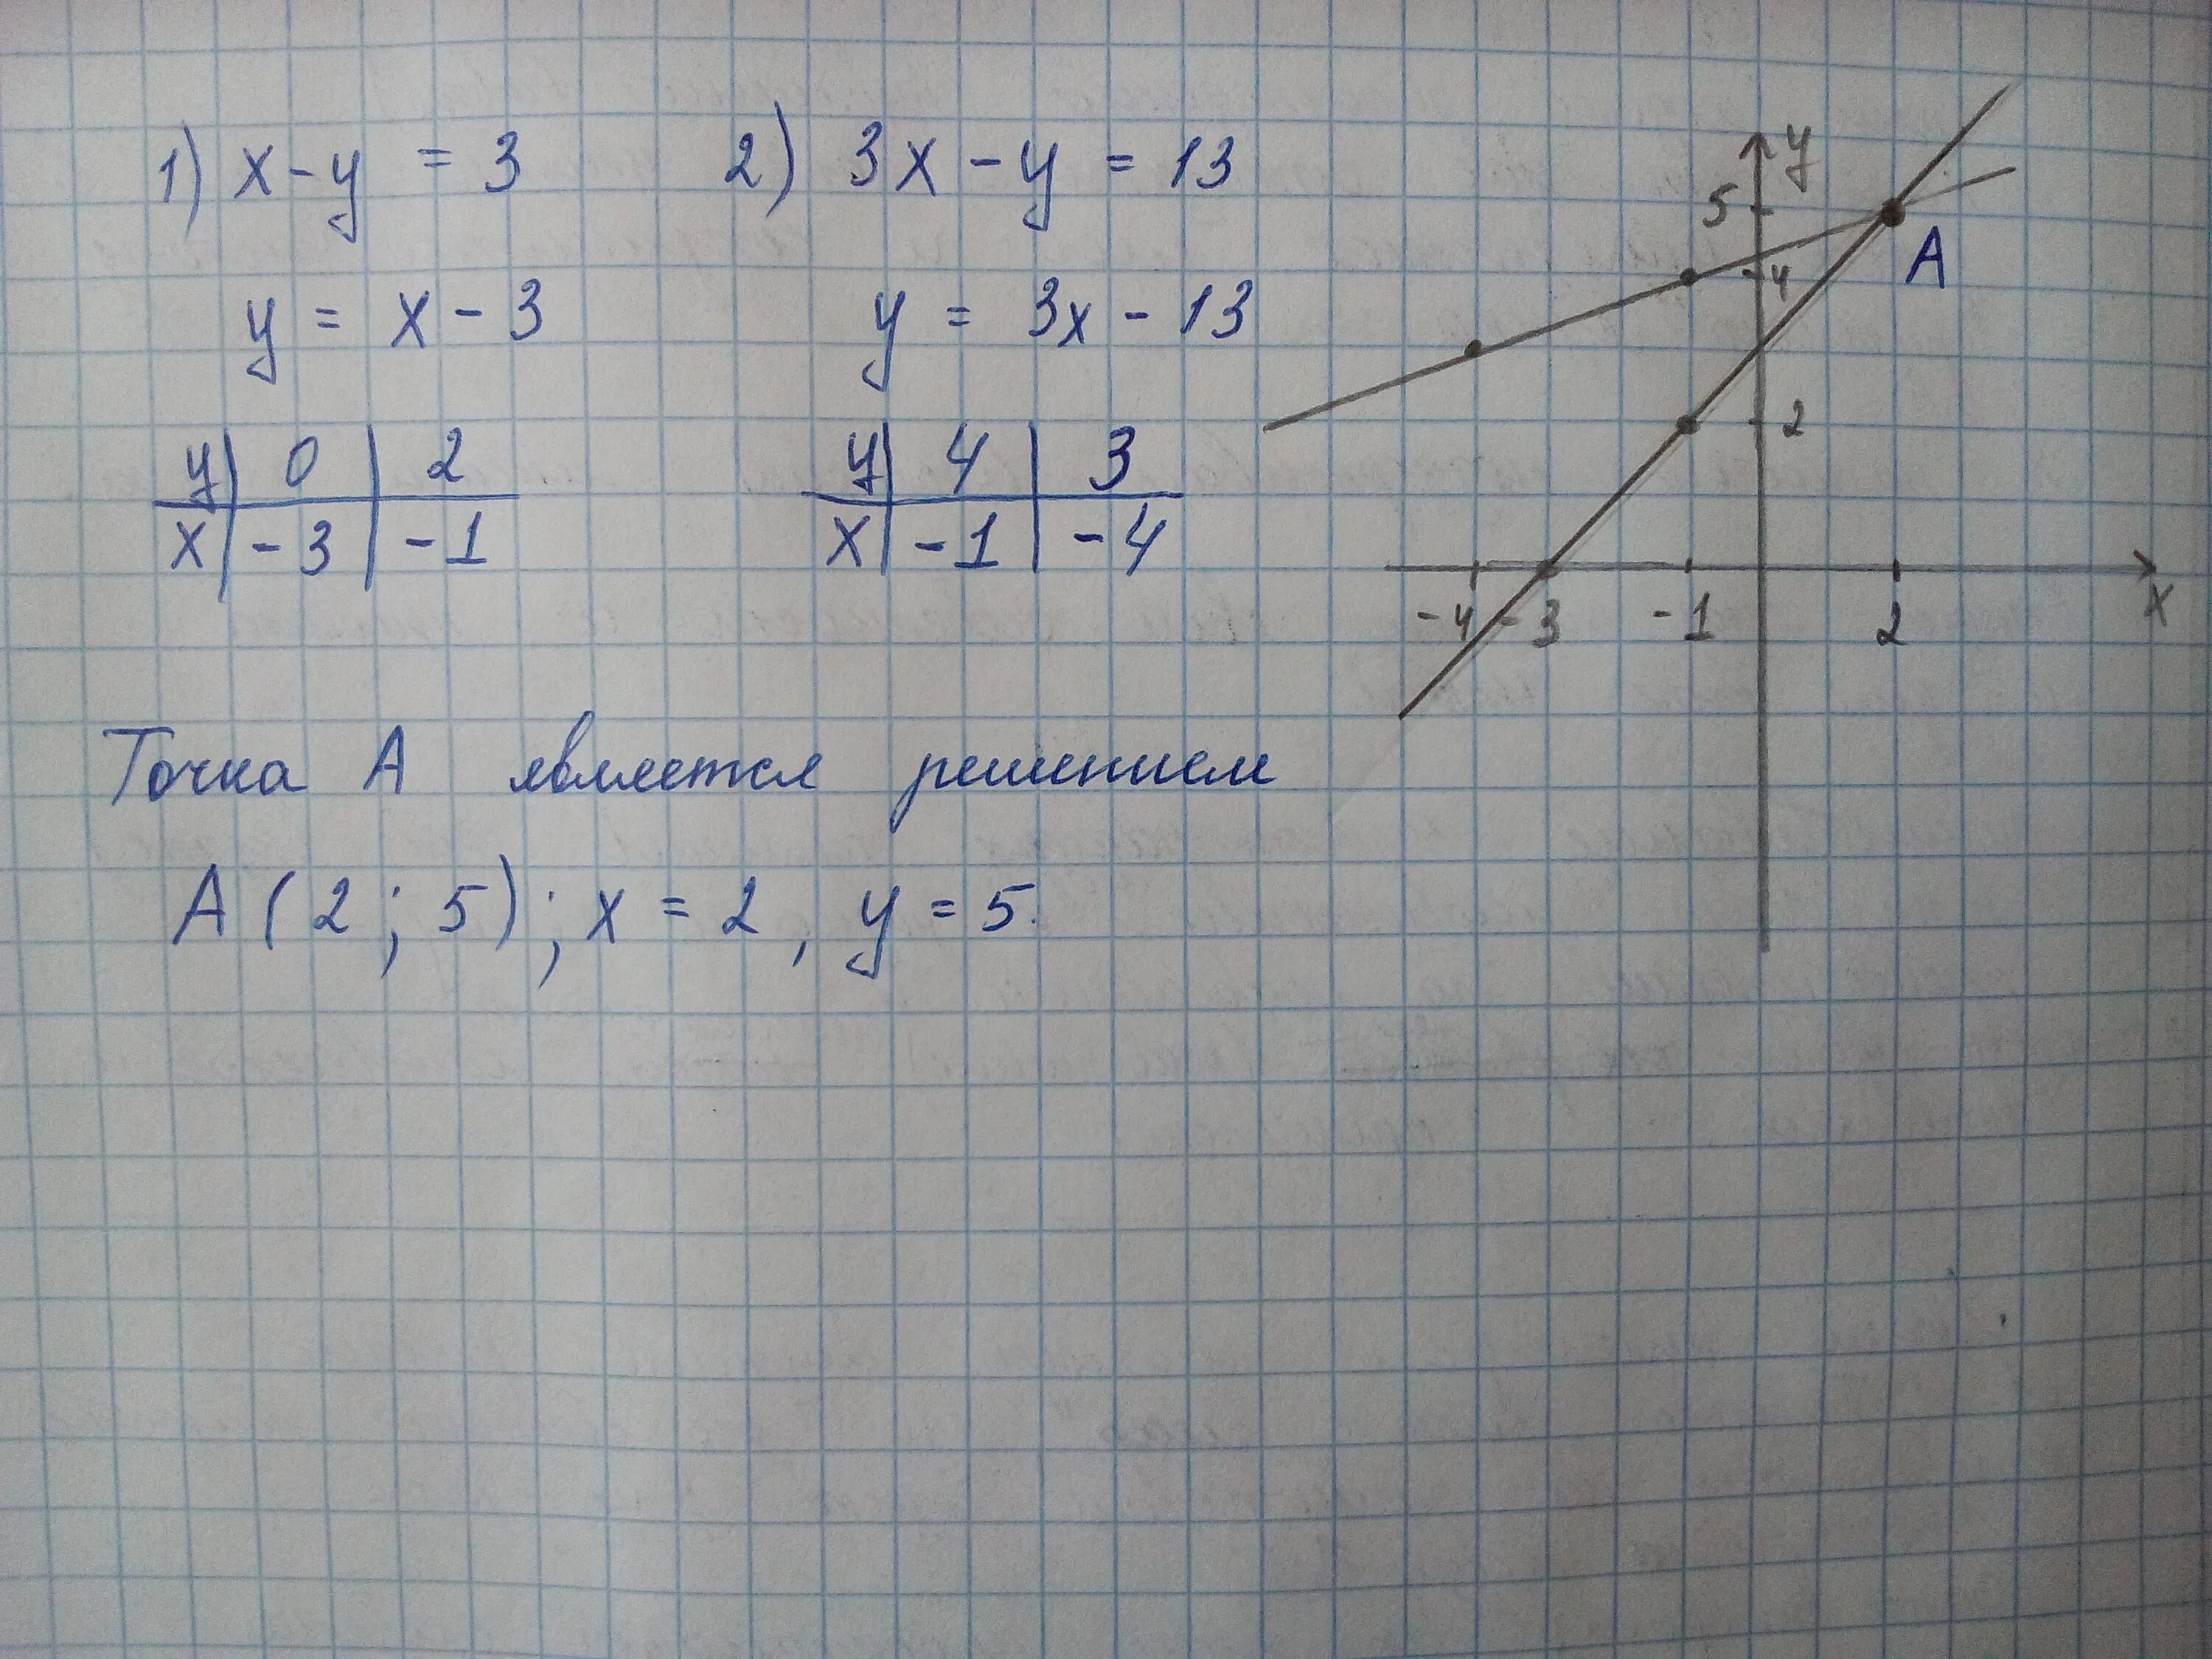 6x 5 8x 13 3. Решите методом подстановки систему уравнений x+5y 15. Решение системных уравнений y=x-6;y=4-1,5x. Решение методом подстановки систему уравнений x+5y 15 2x-y 8. Решение систем уравнений x+5y=15.